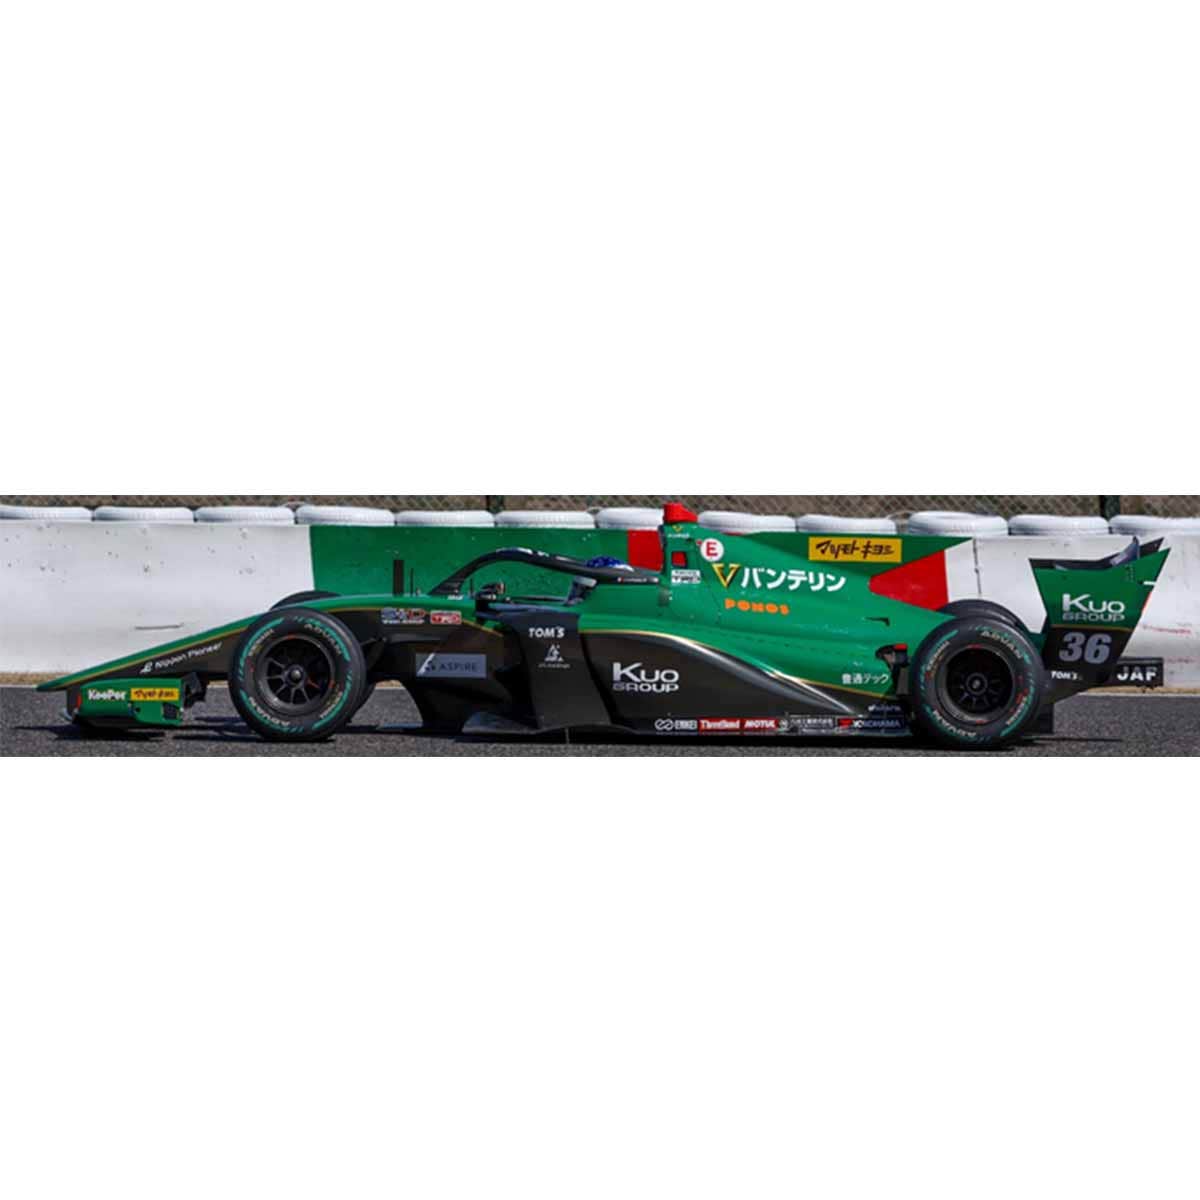 VANTELIN TOM'S SF23 No.36 VANTELIN TEAM TOM'S TRD 01F - Super Formula 2023 - Giuliano Alesi - 1:43 Scale Resin Model Car